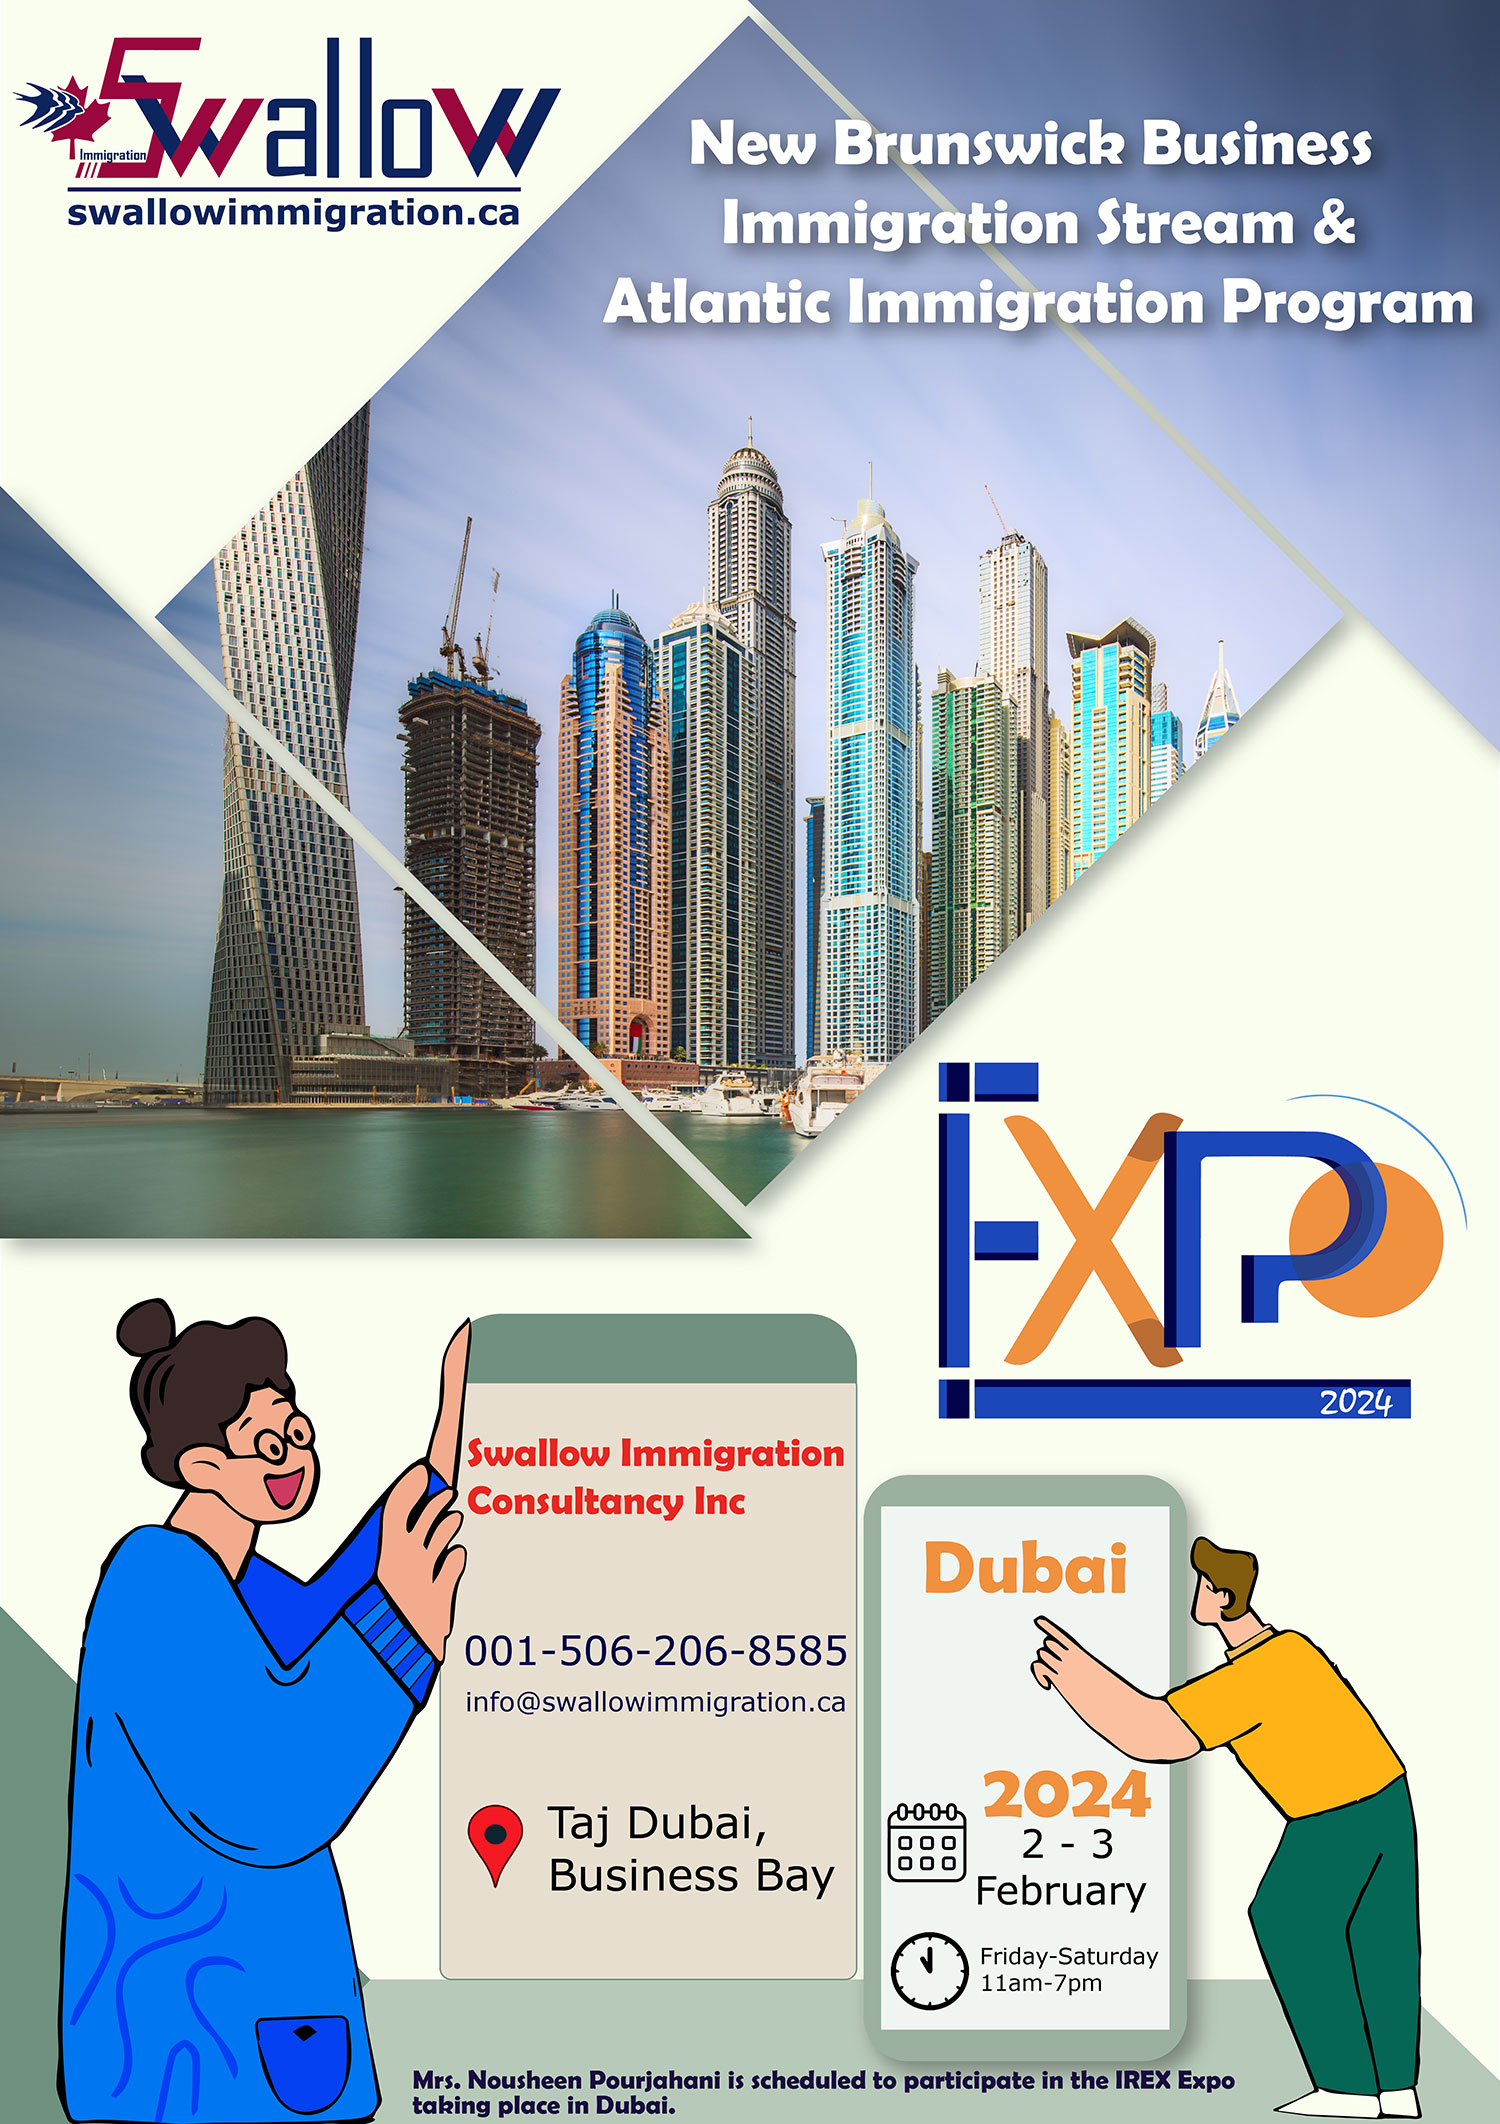 Dubai Expo 2024 at Taj Dubai, Business Bay